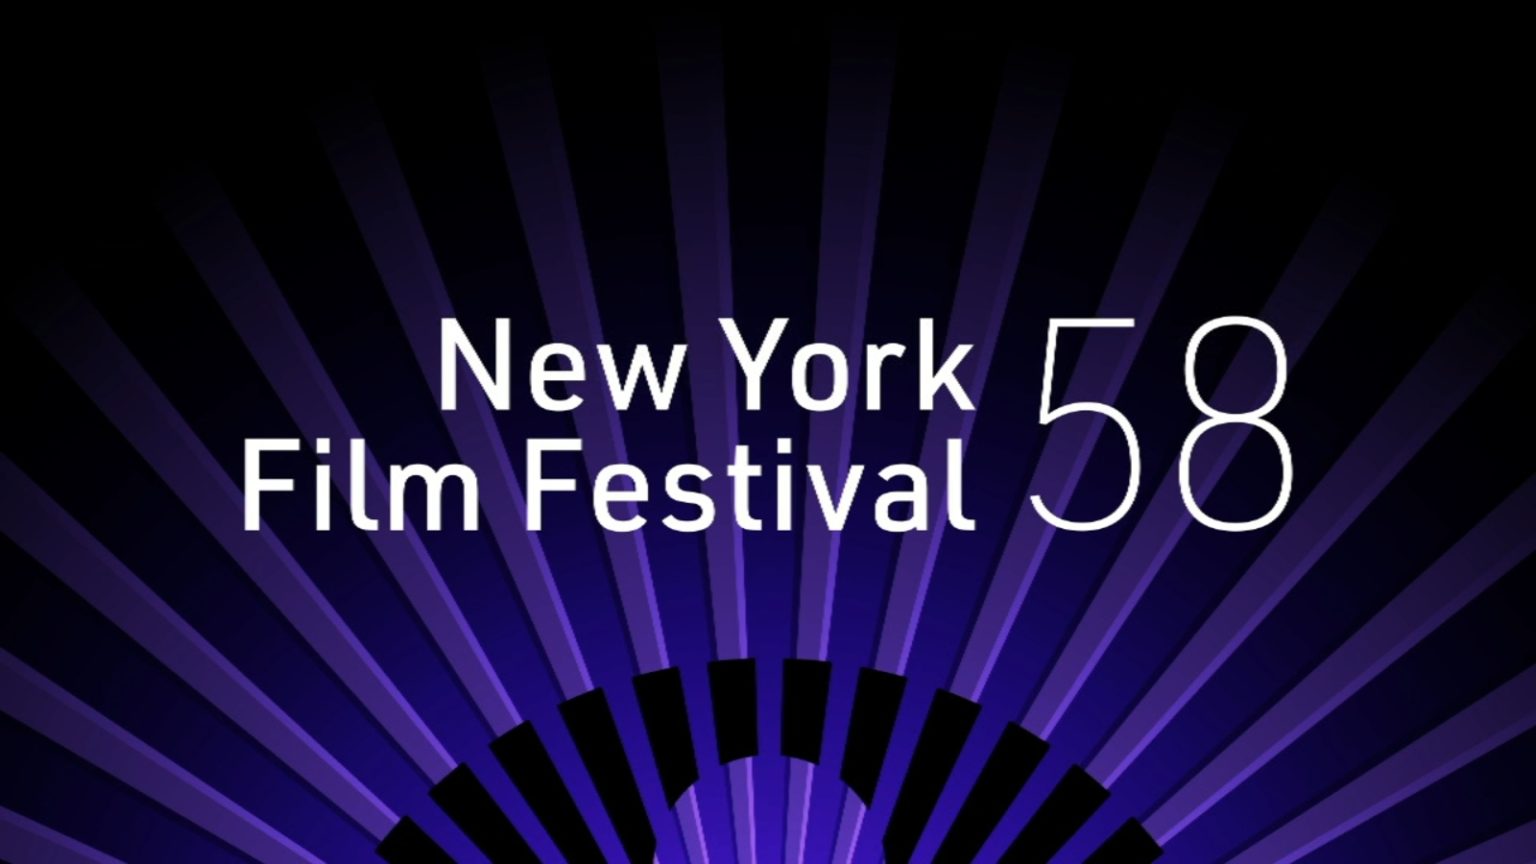 The New York Film Festival M.Scott Phillips Film Critic and